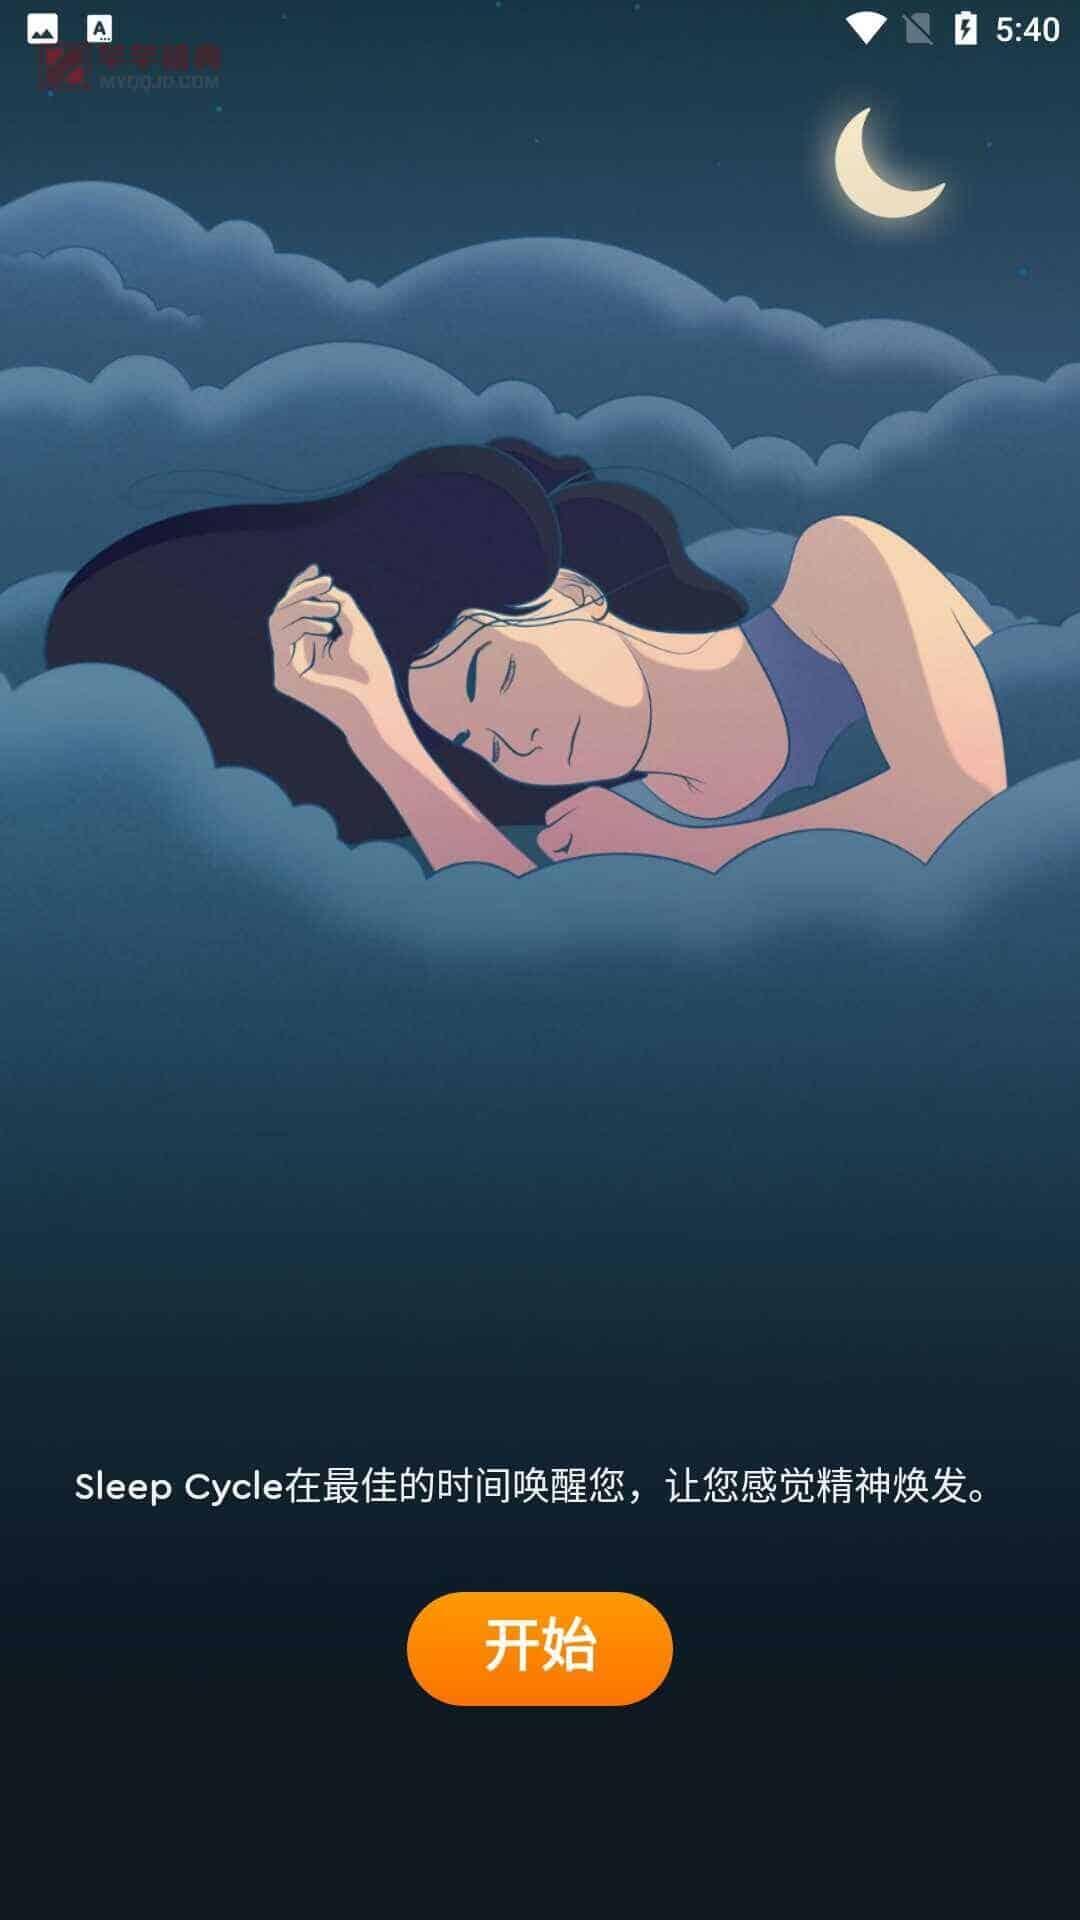 Sleep Cycle: Sleep Tracker v4.23.39.7890 for Android 解锁高级版